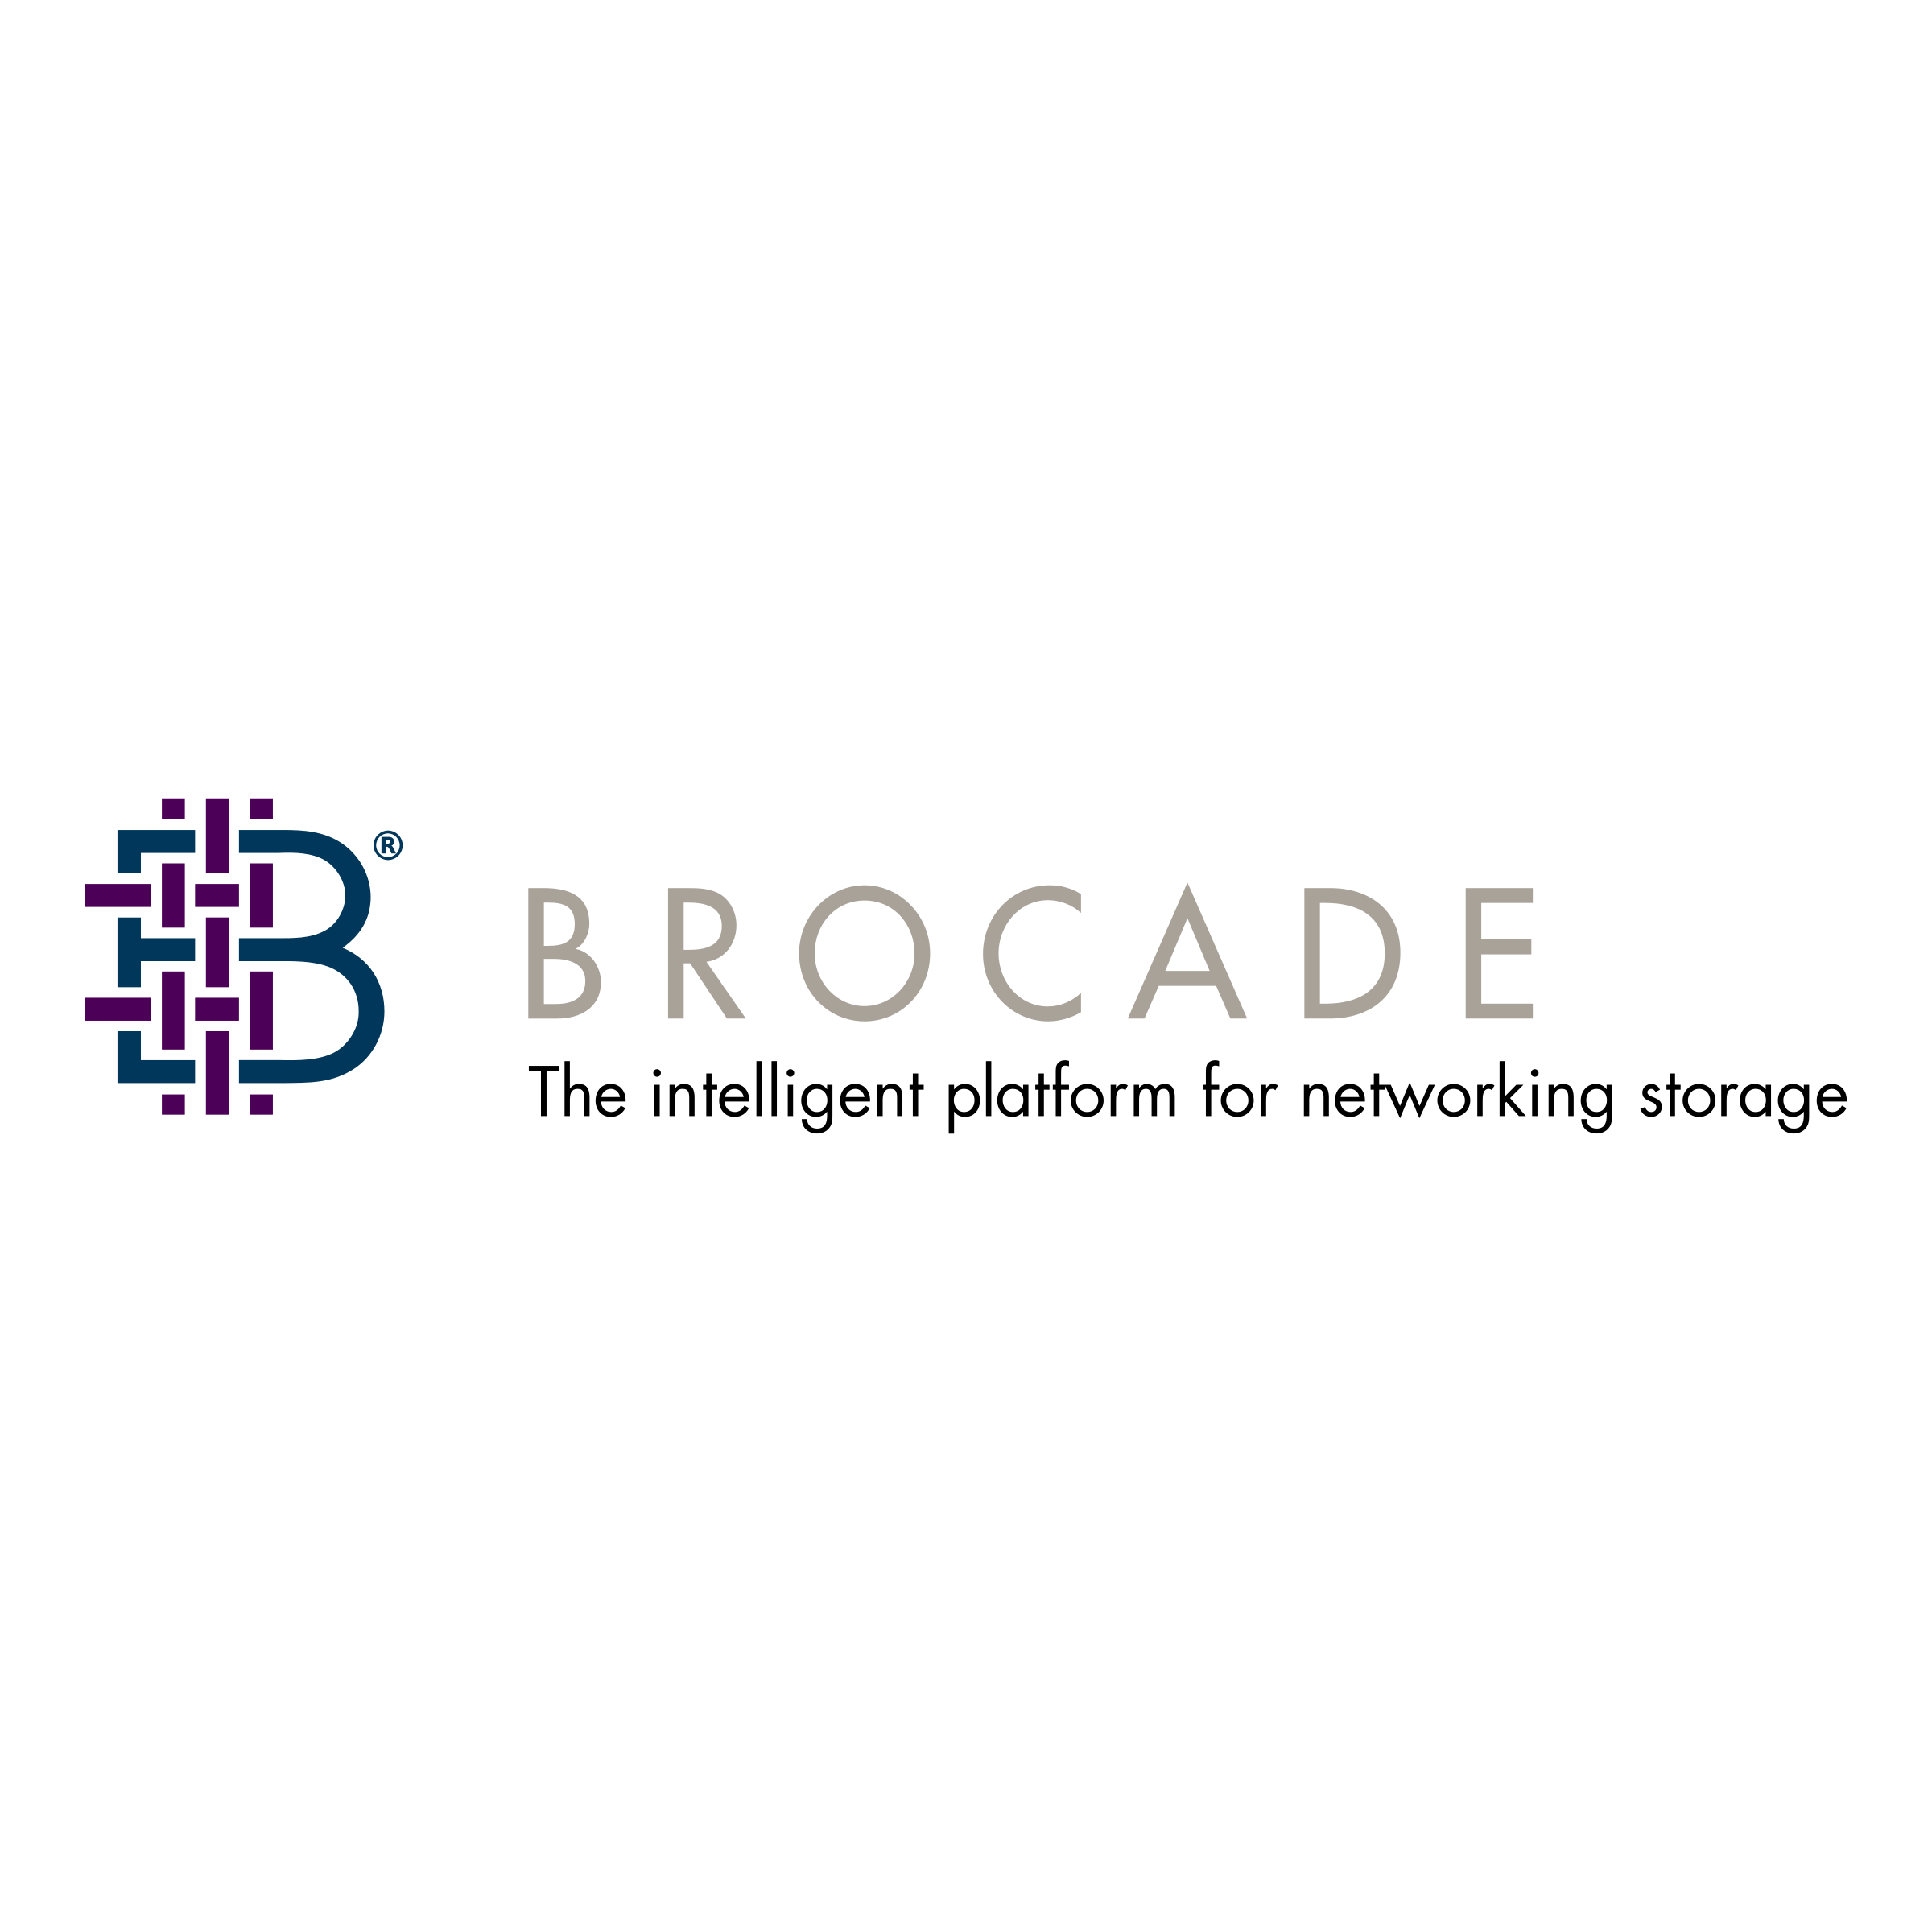 Brocade Logo - Brocade Logo PNG Transparent & SVG Vector - Freebie Supply